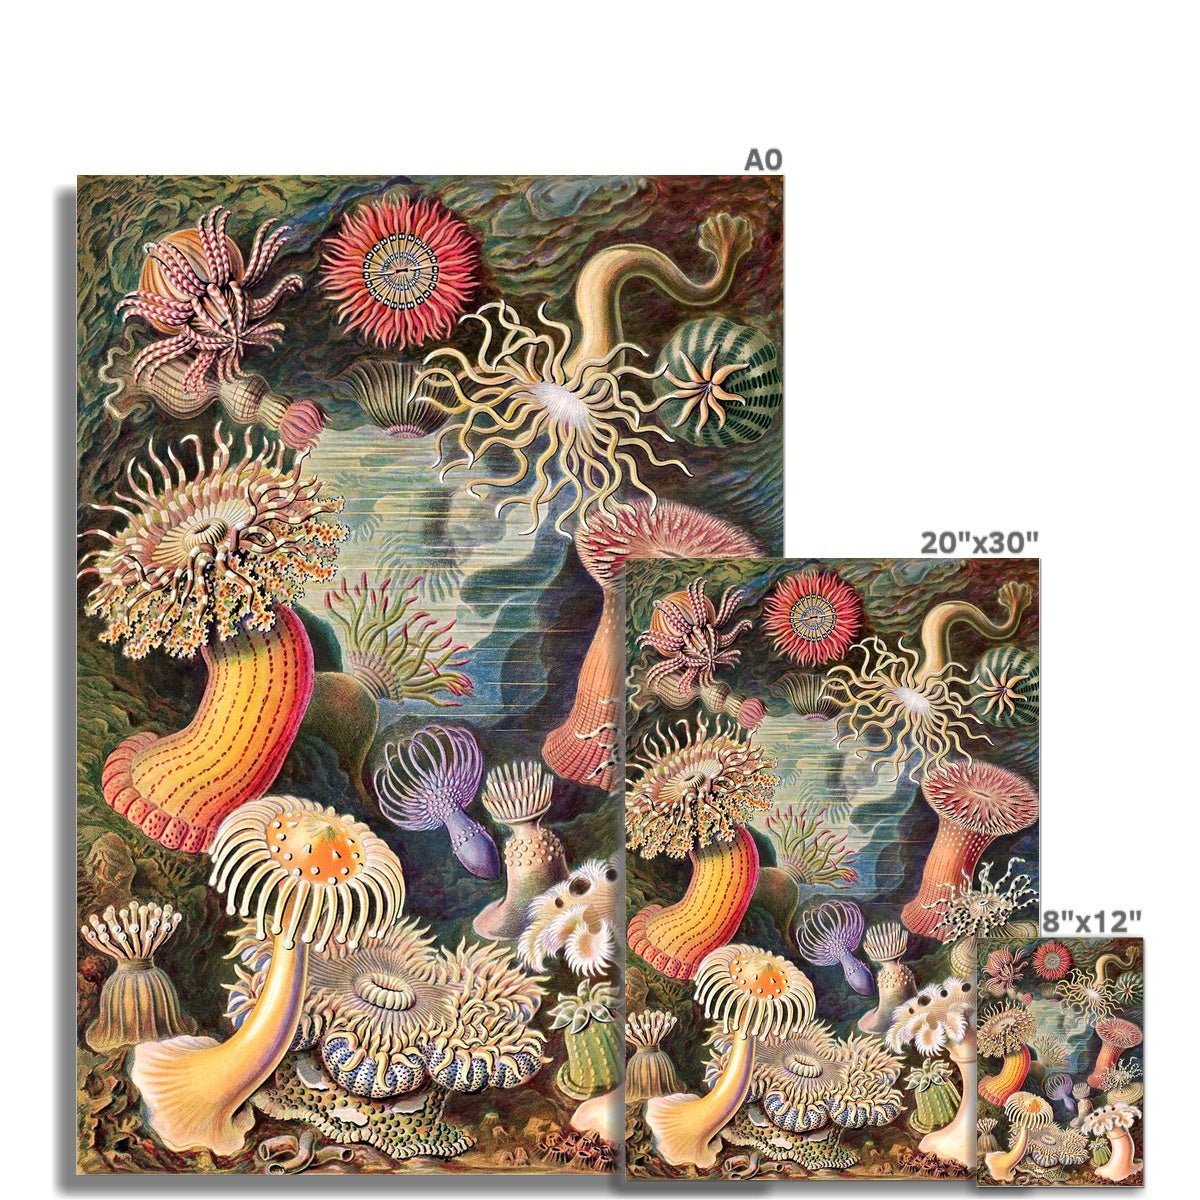 giclee 8"x12" Ernst Haeckel Actiniae Marine Life Ocean Botanical Antique Giclée Fine Art Print